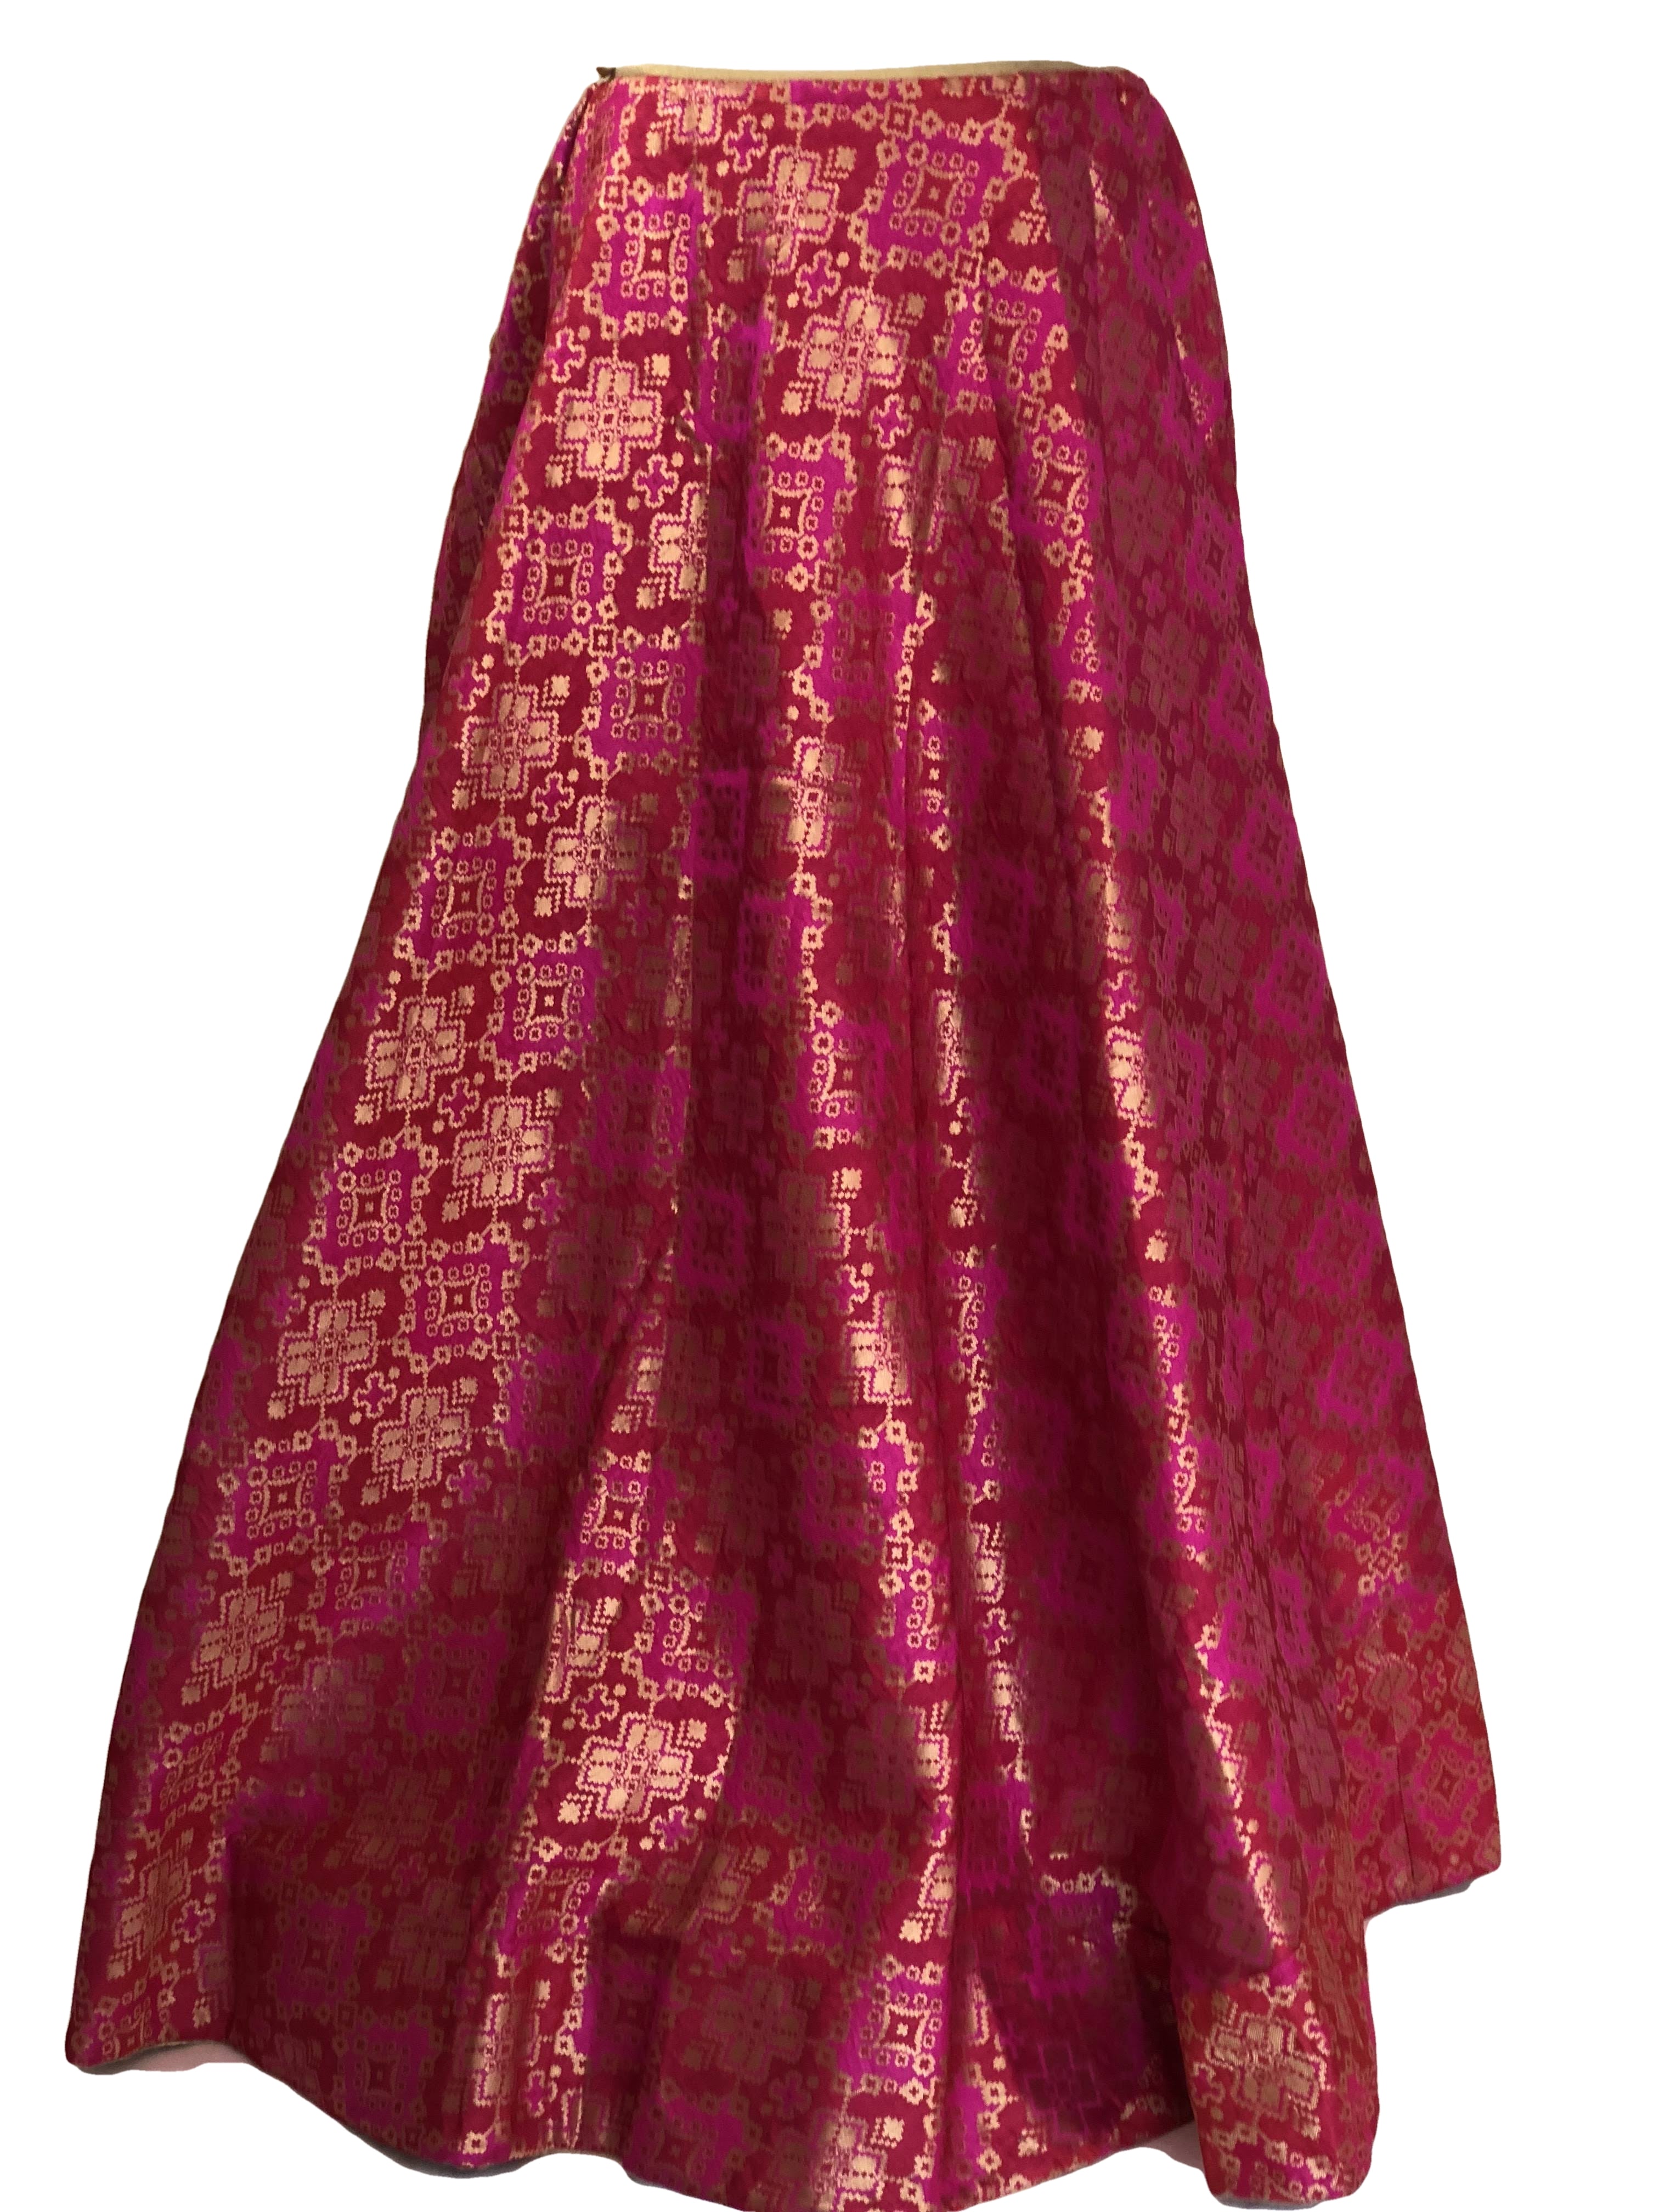 Hot Pink Color - Silk Brocade Woven Lehenga skirt - Long Floor Length